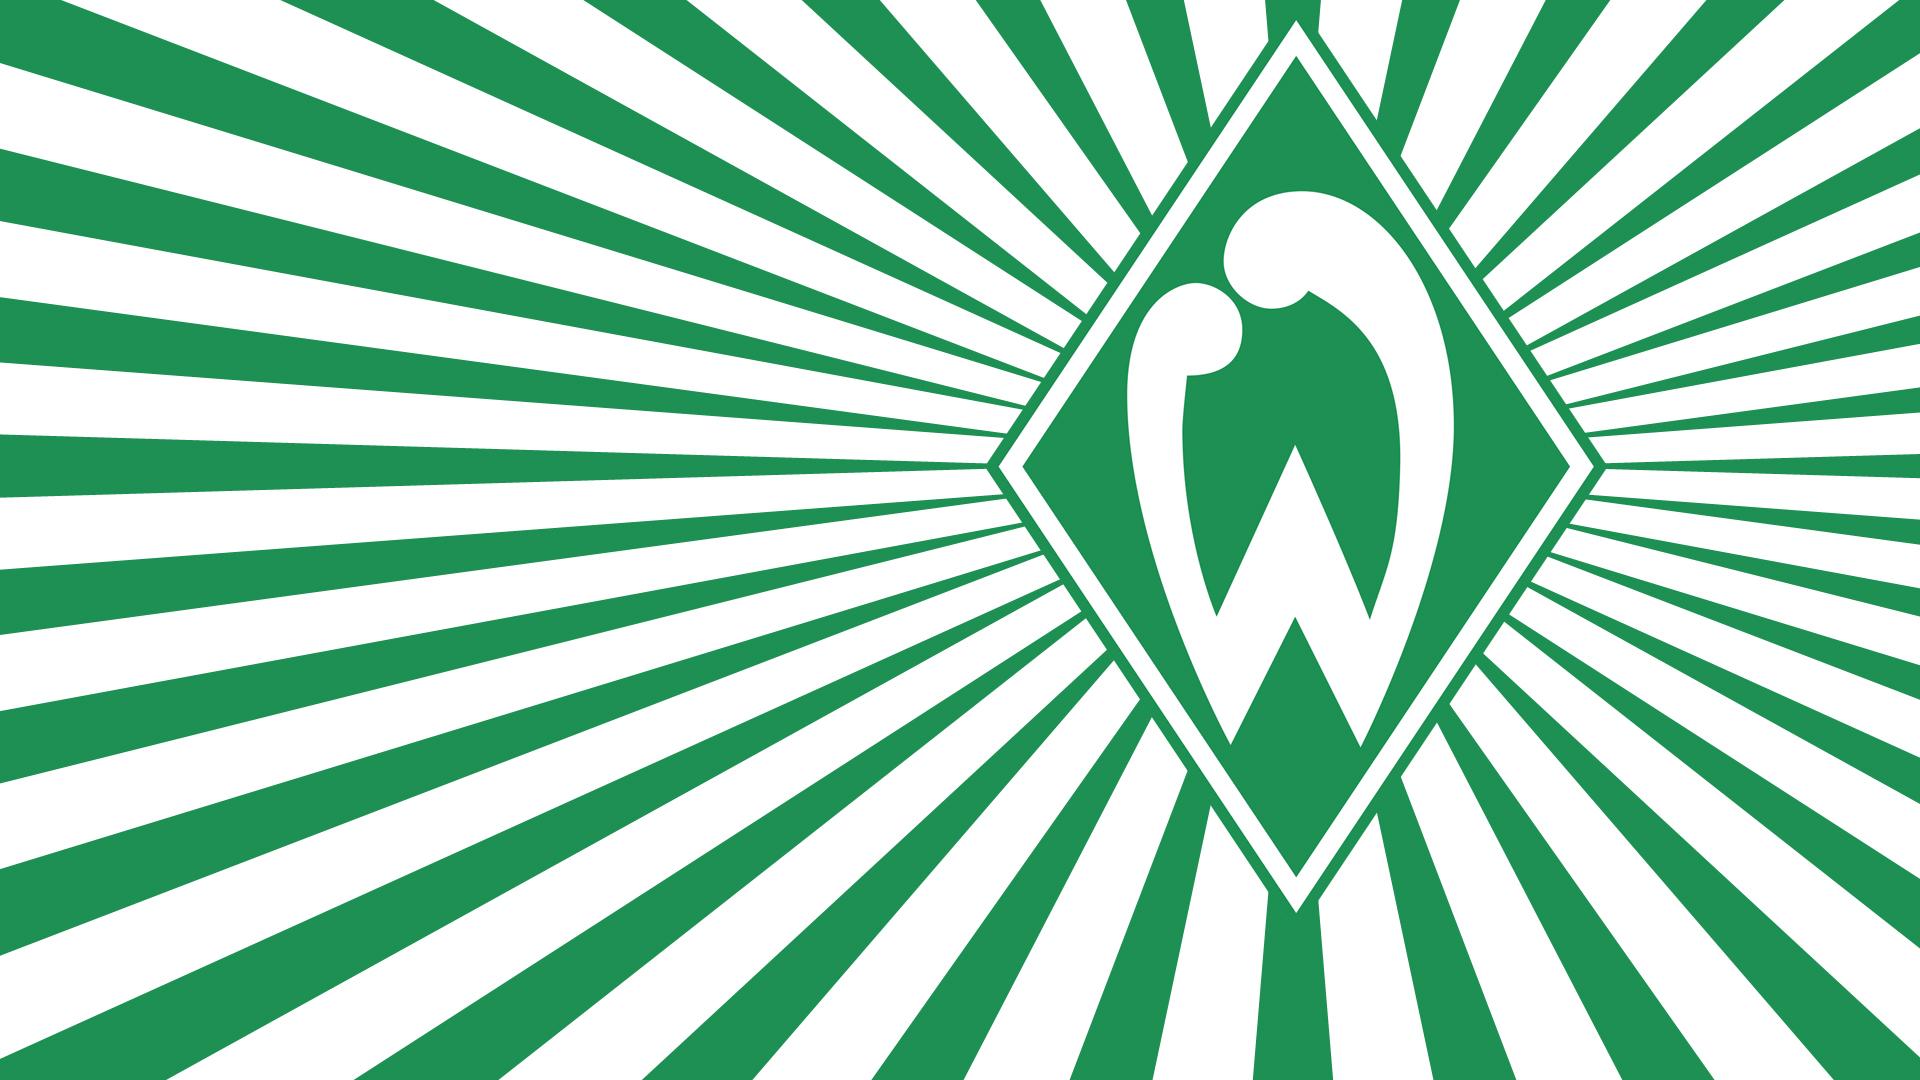 Werder Bremen FC Logo wallpaper 2018 in Soccer